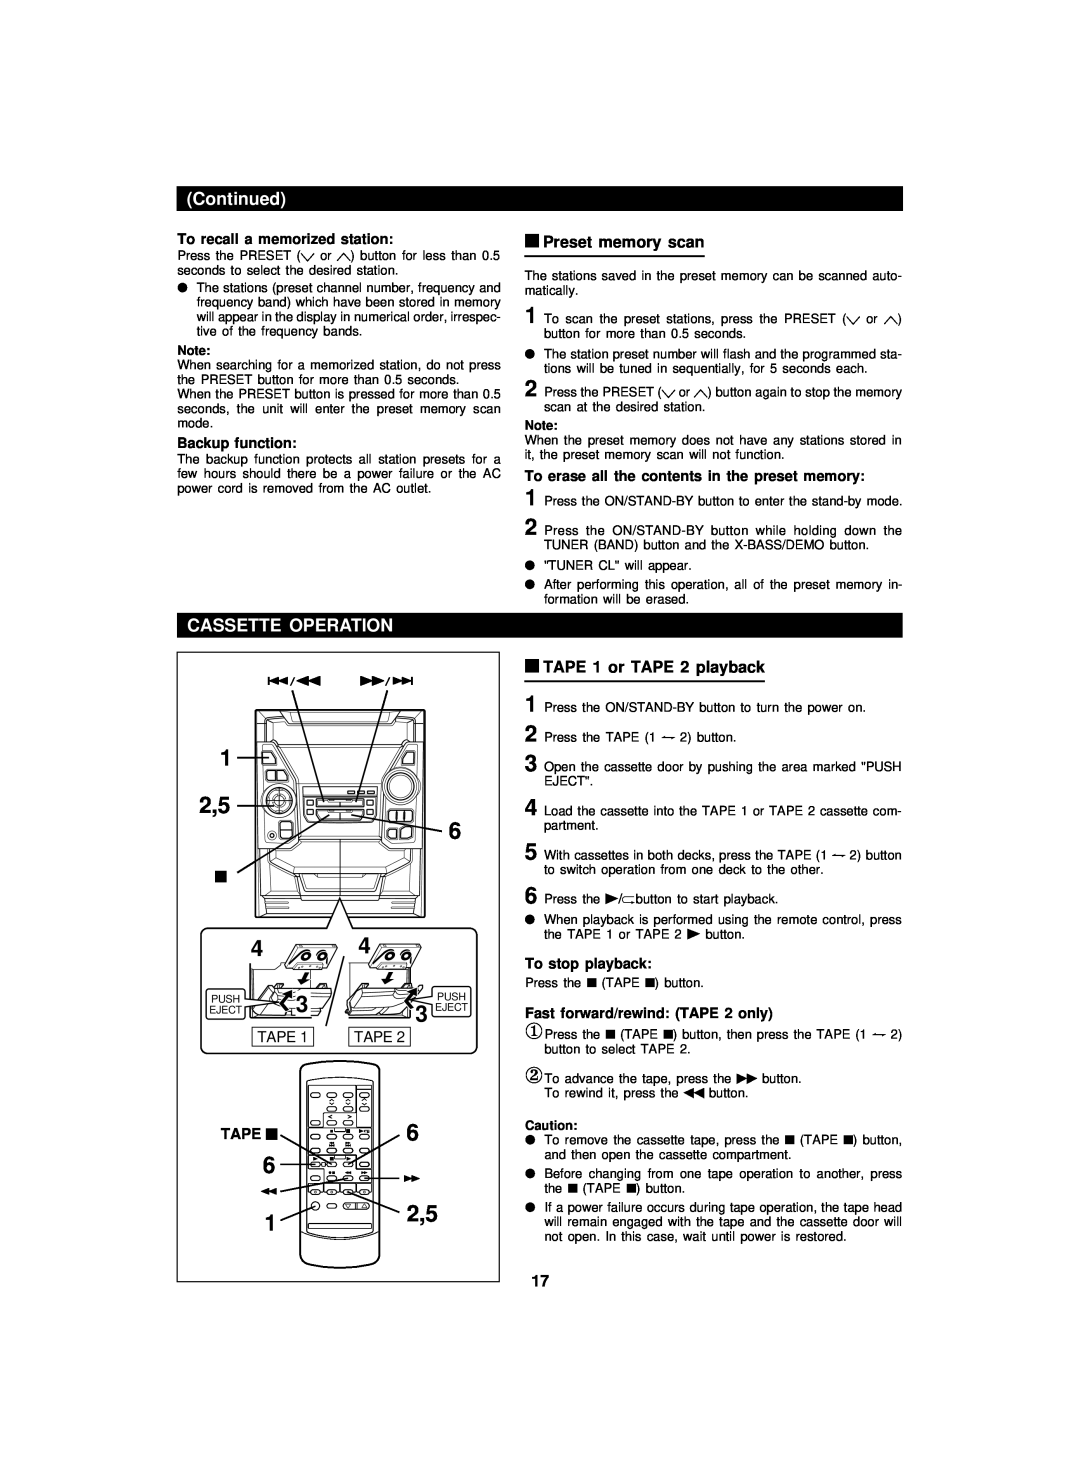 Sharp CDPC3500 operation manual 